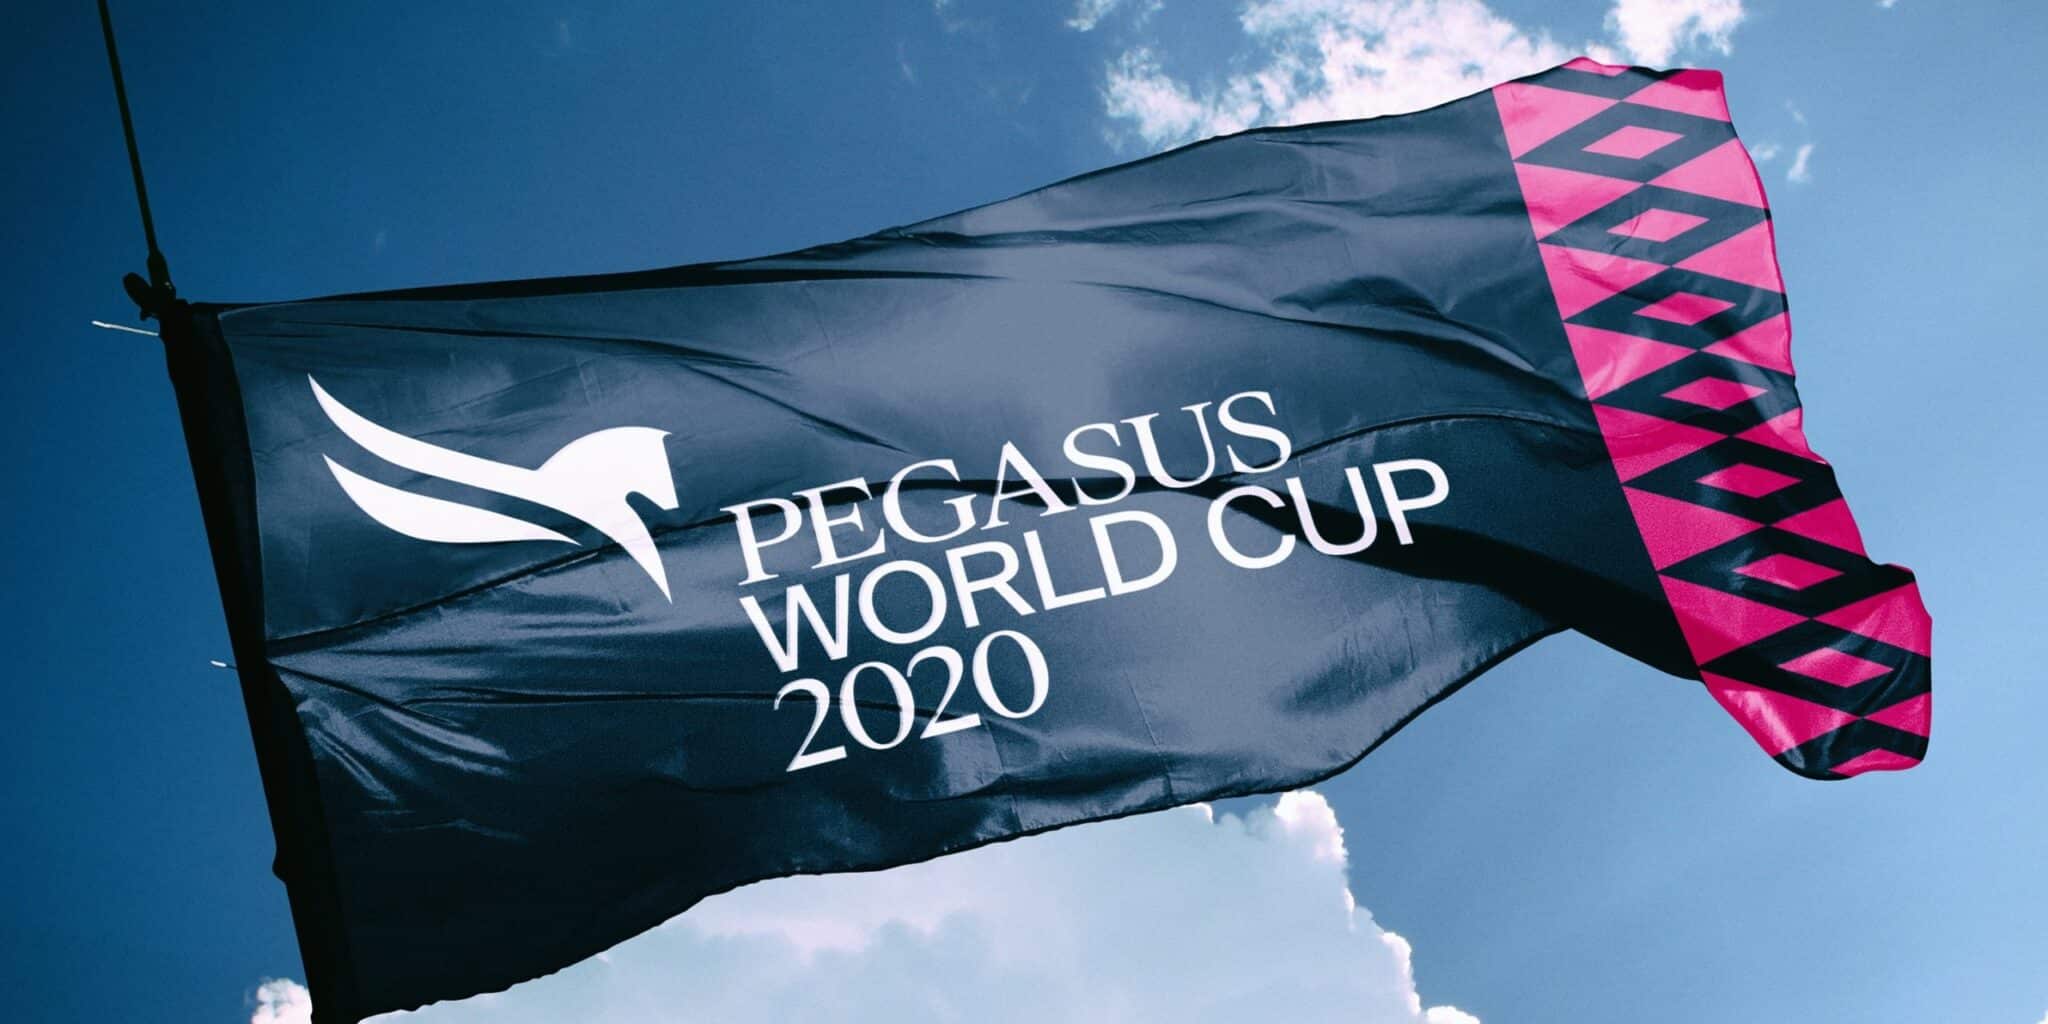 Stronach Shrinks Purses of Pegasus World Cup Races